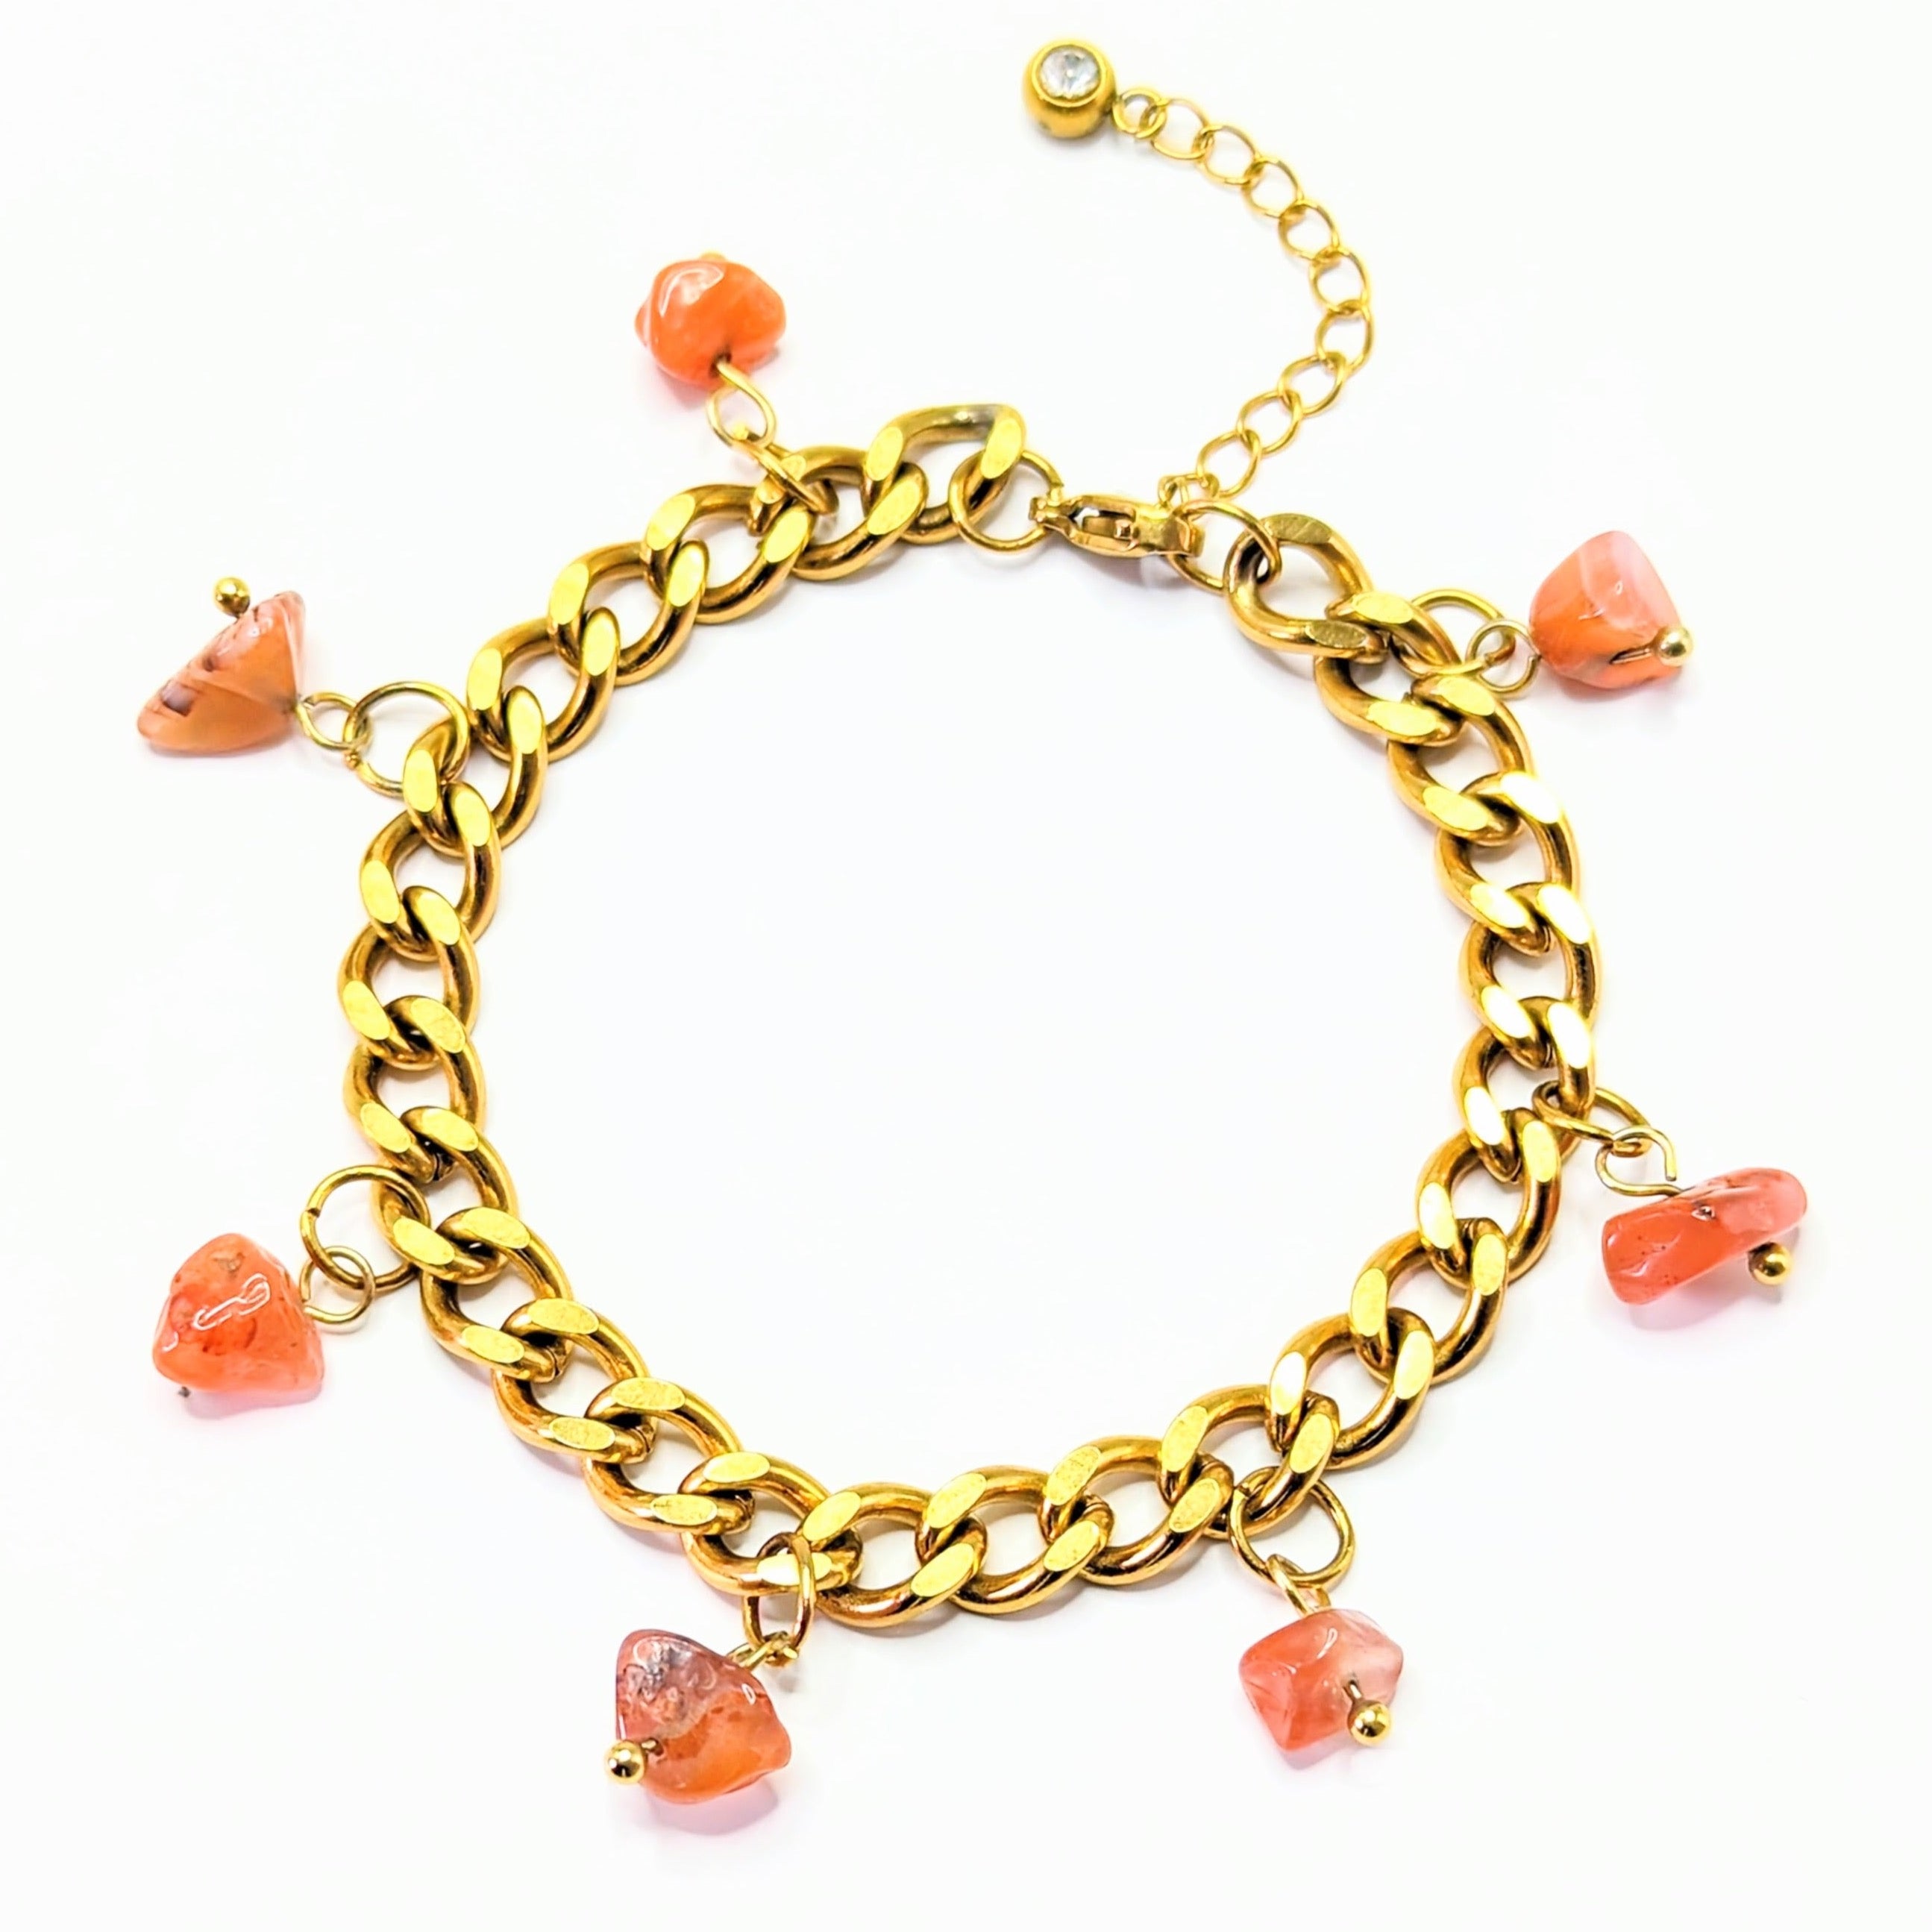 Carnelian 'Heal Me' Crystal Charm Bracelet